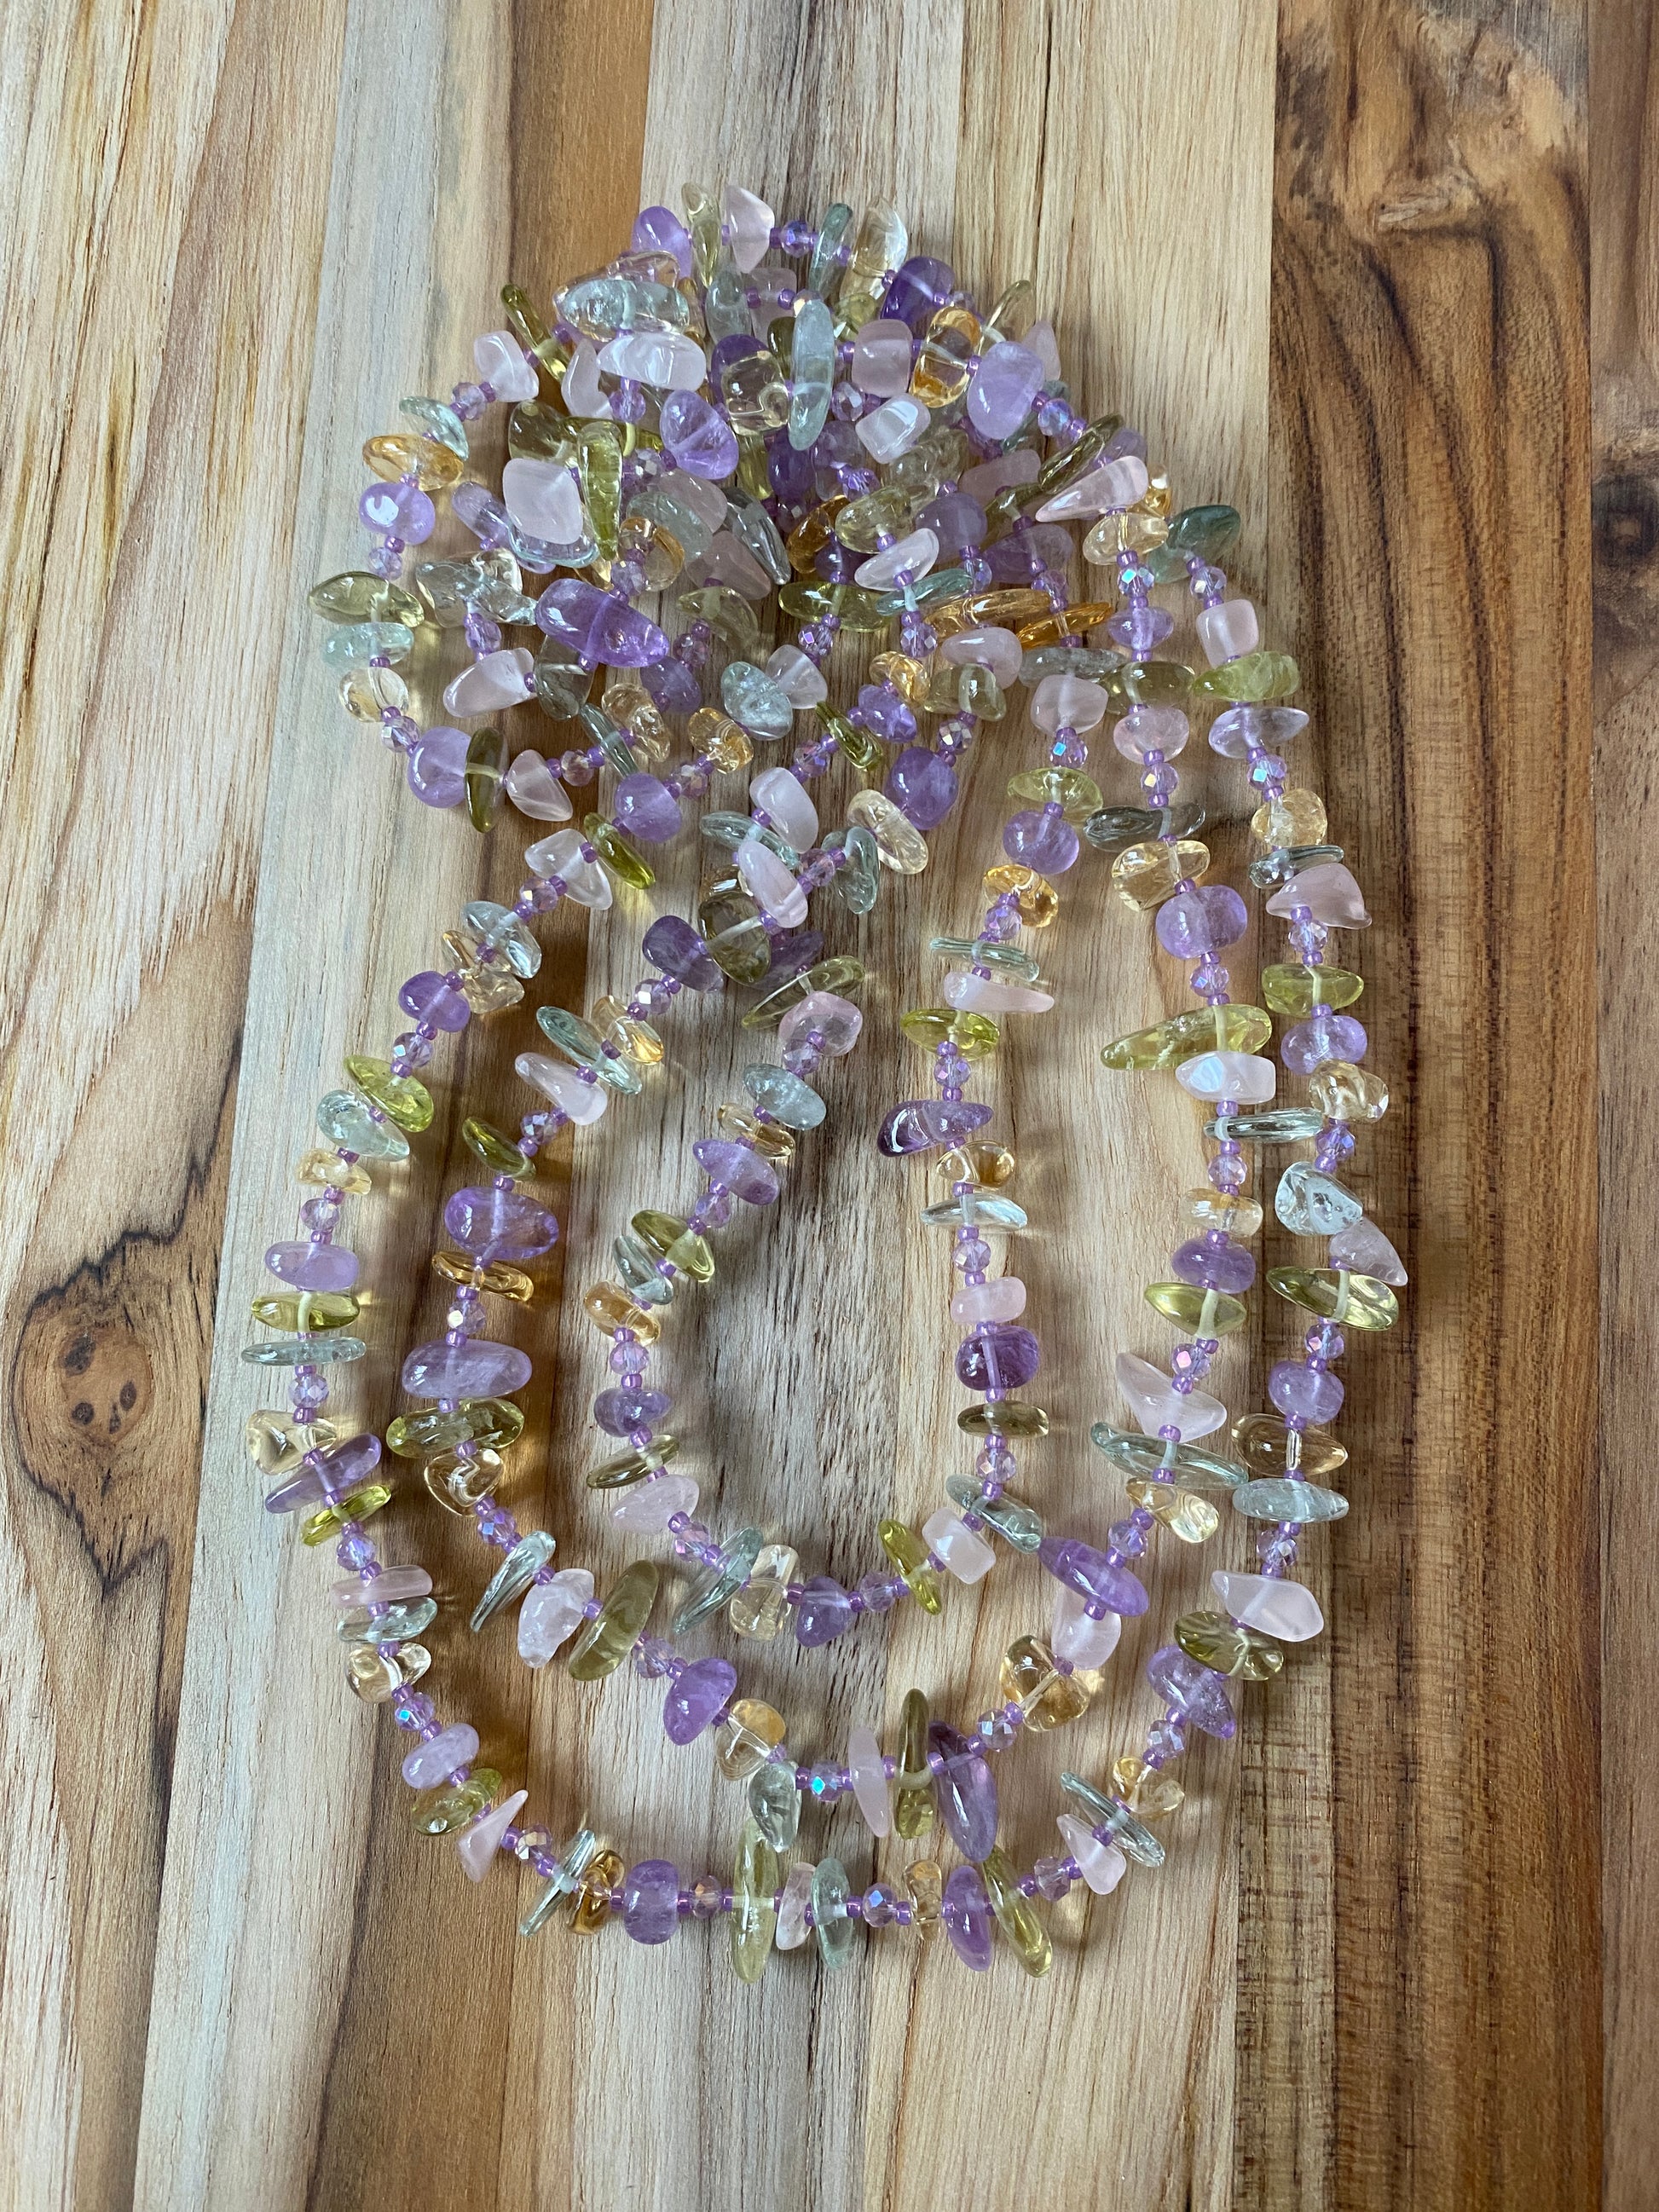 60" Extra Long Wraparound Multi Gemstone Tumbled Chip Beaded Necklace with Crystal Beads - My Urban Gems